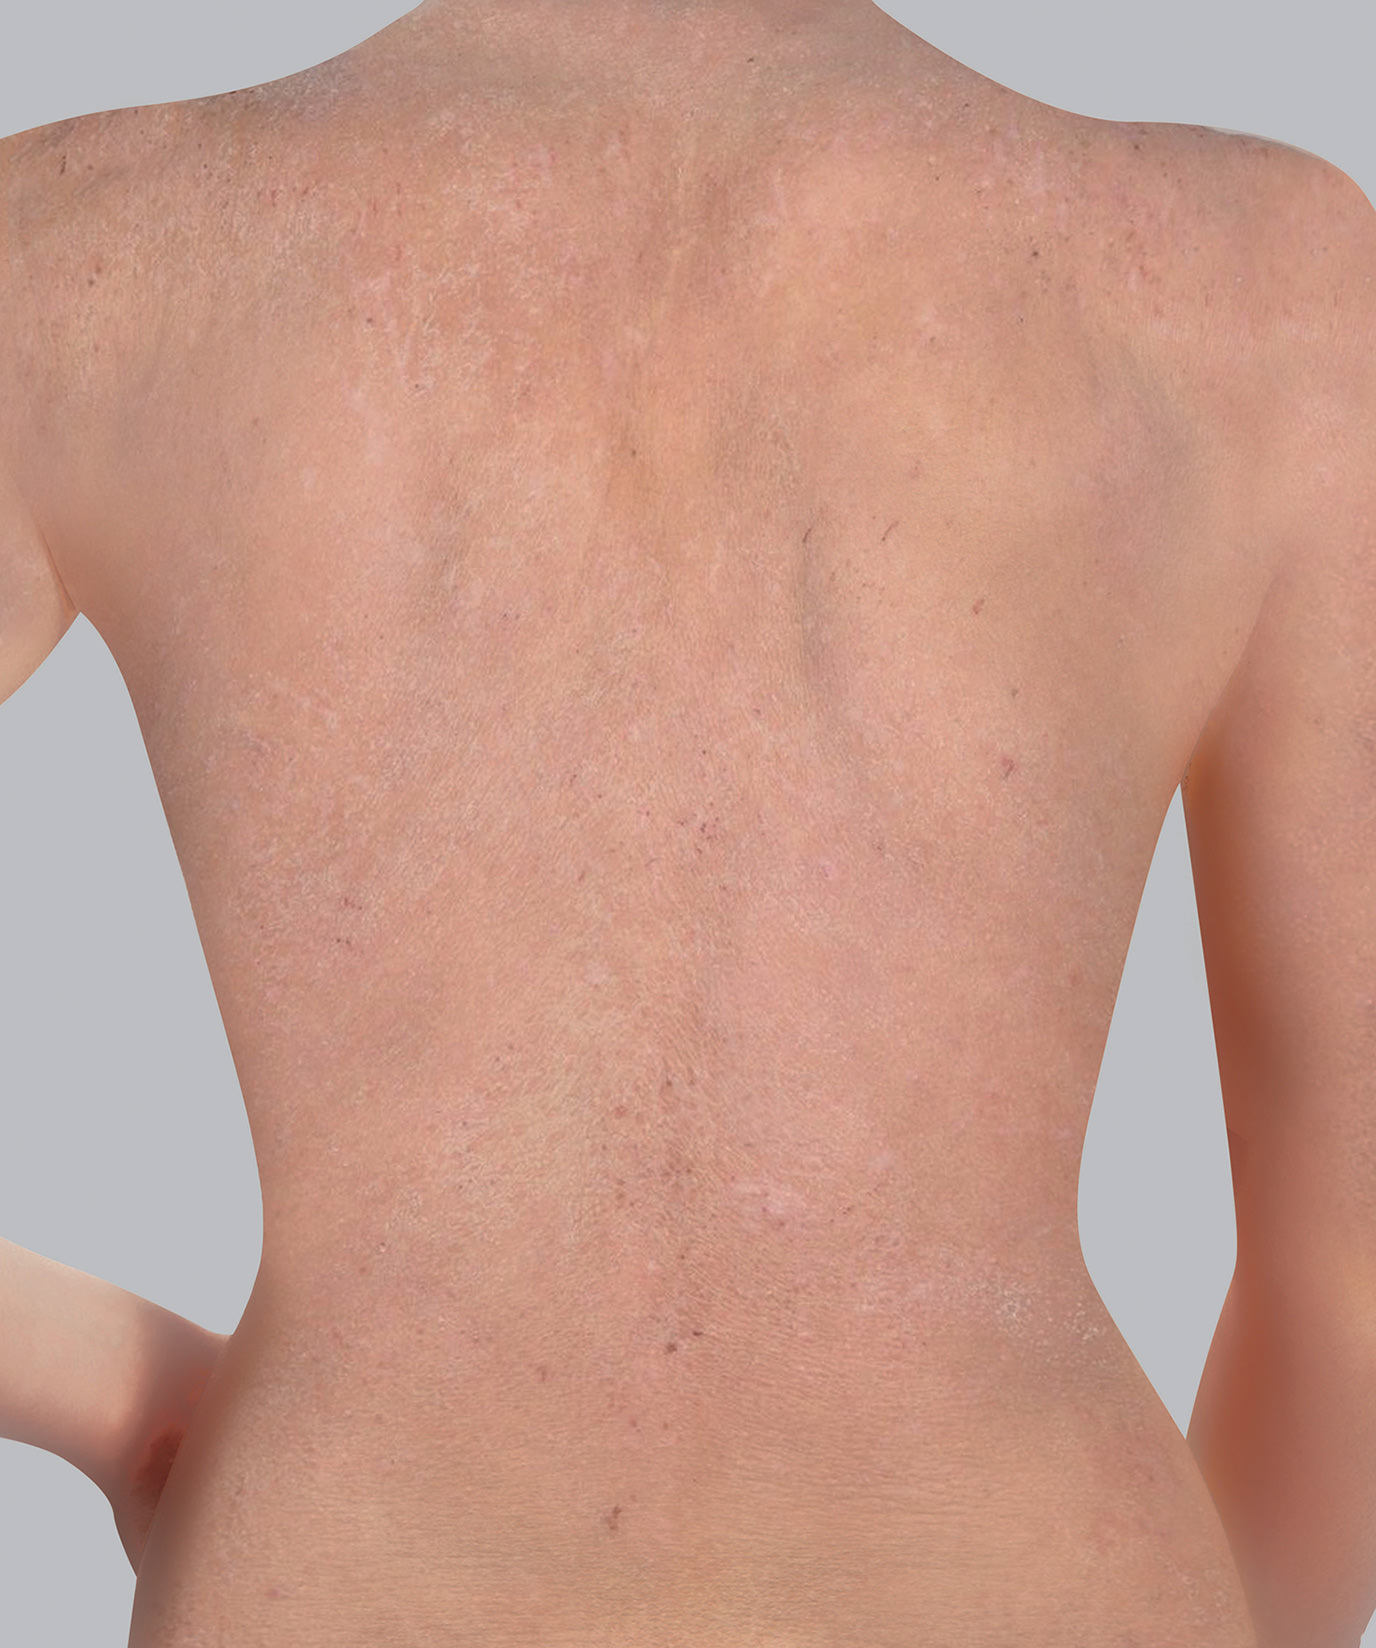 Atopic eczema symptoms: dry / very dry skin or xerosis